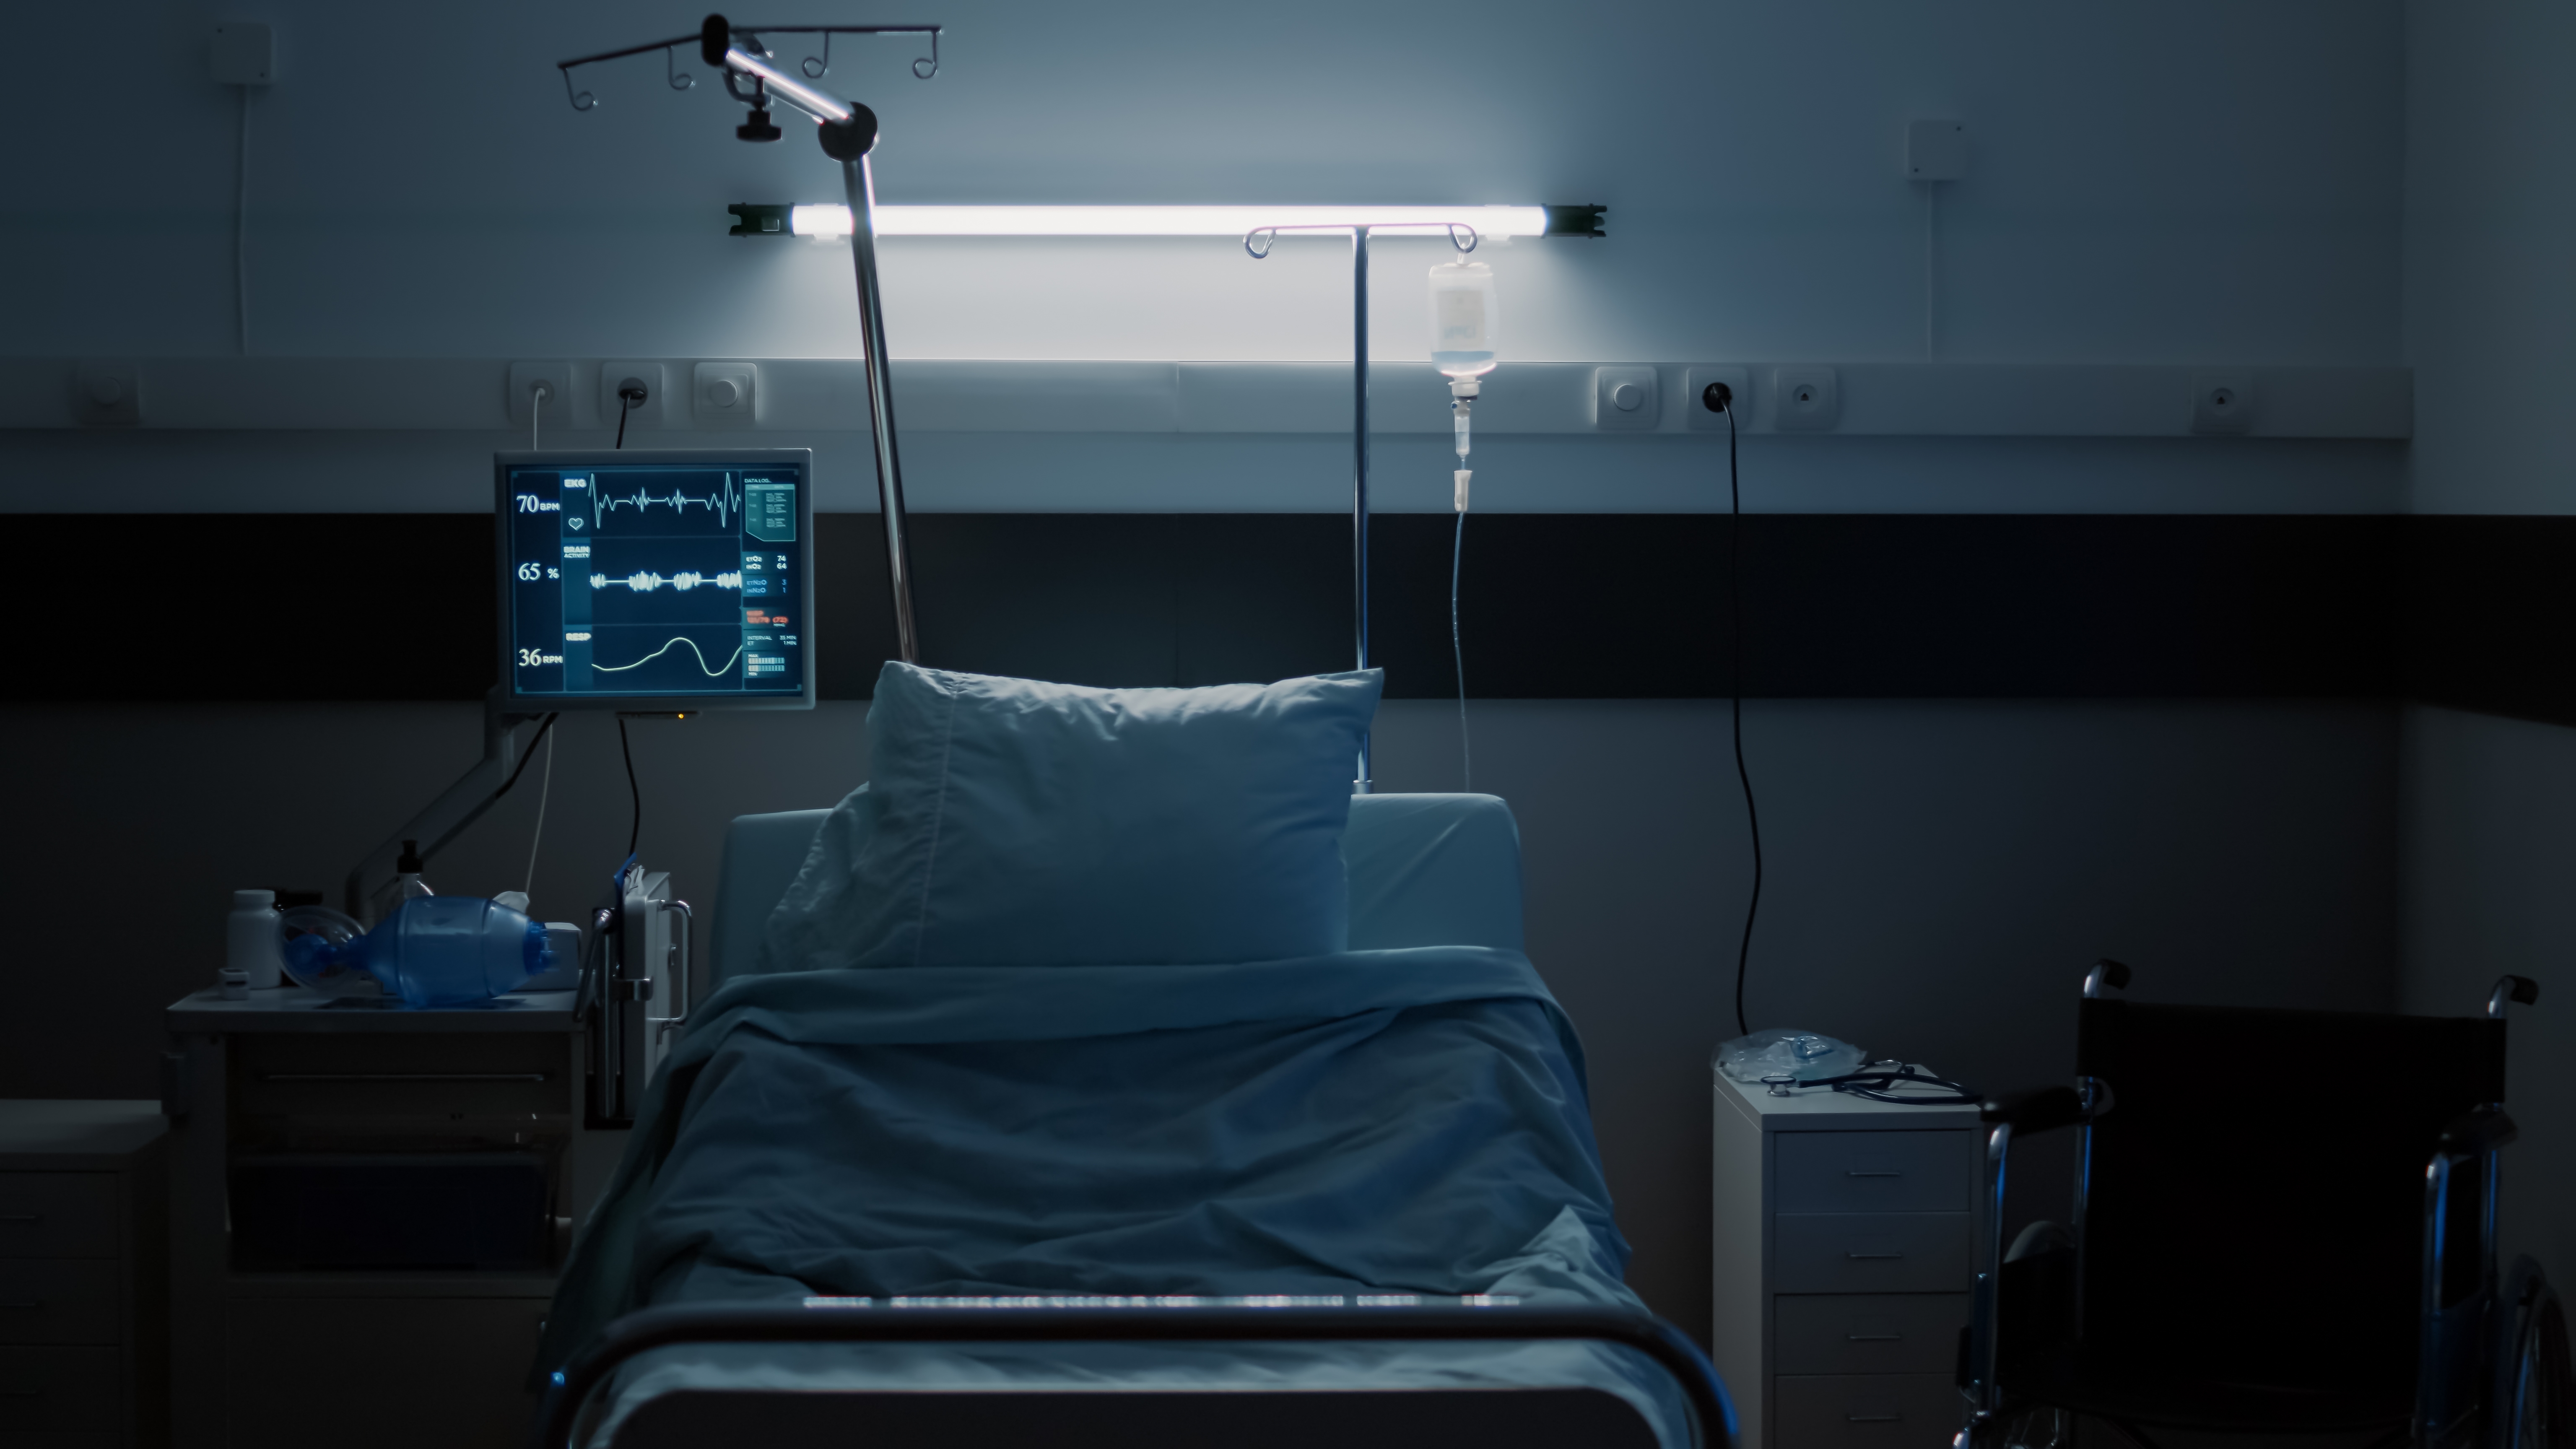 Nobody in hospital bed | Source: Shutterstock